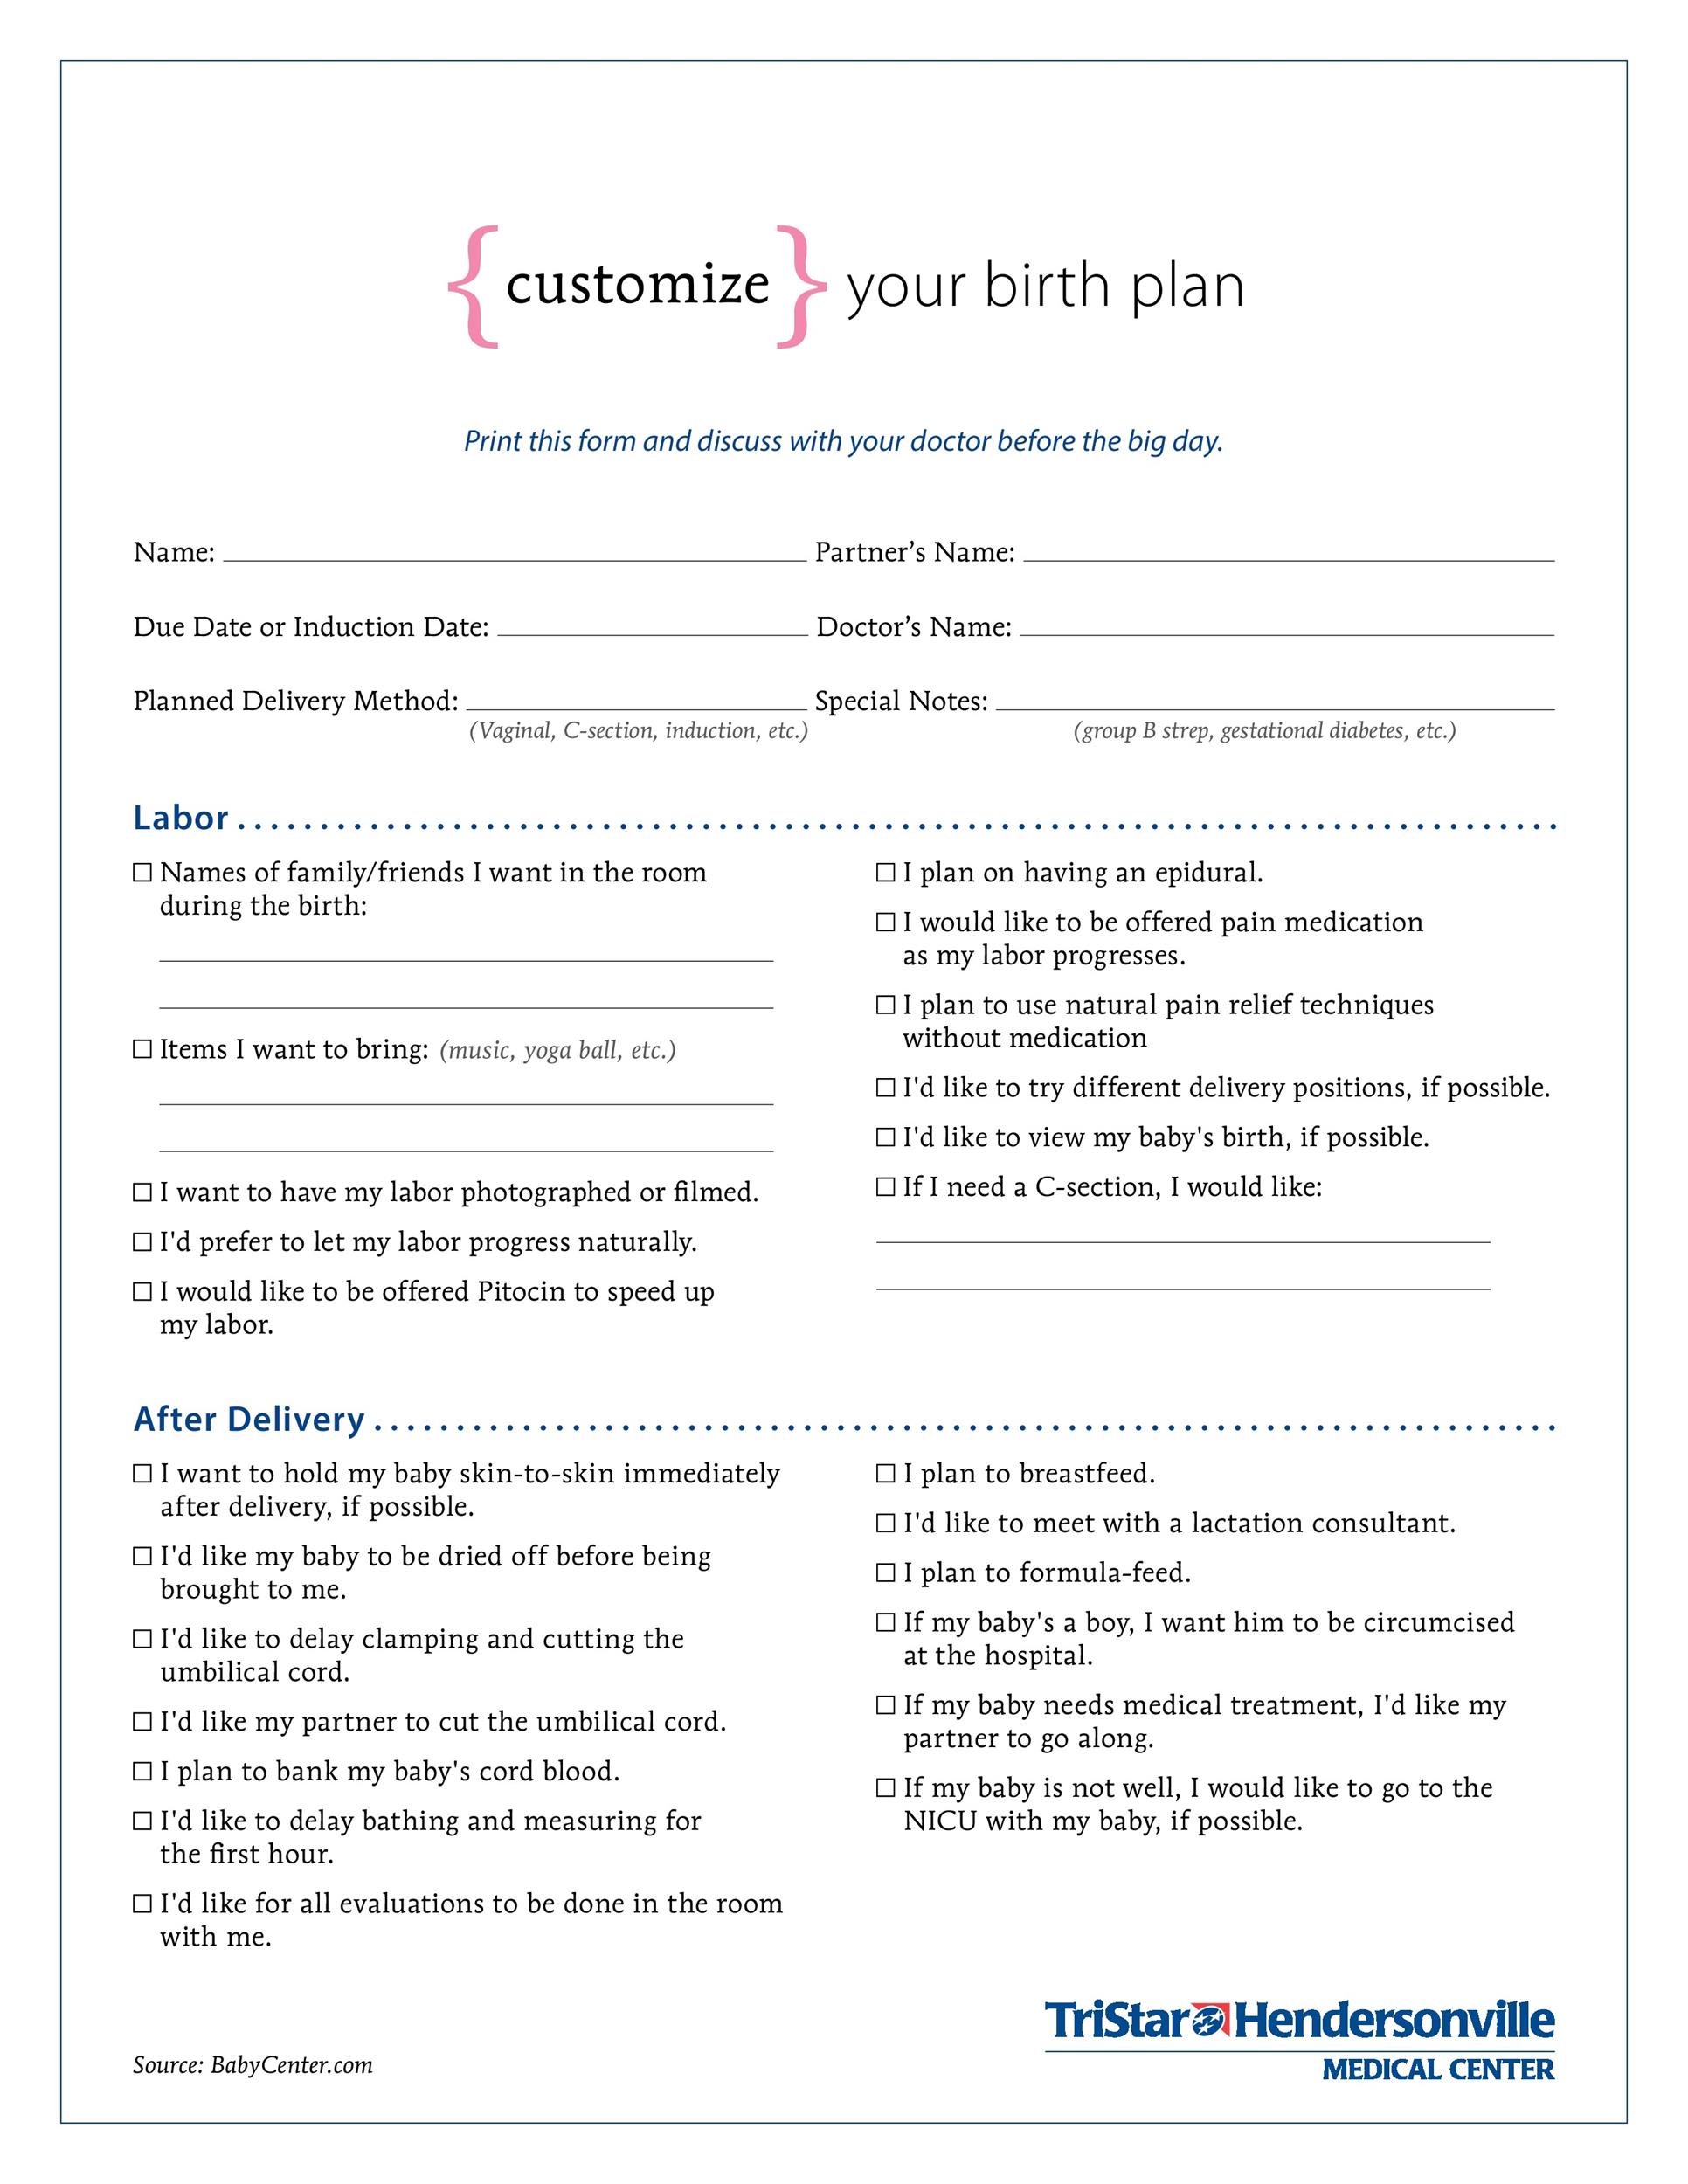 47+ Printable Birth Plan Templates [Birth Plan Checklist] ᐅ TemplateLab